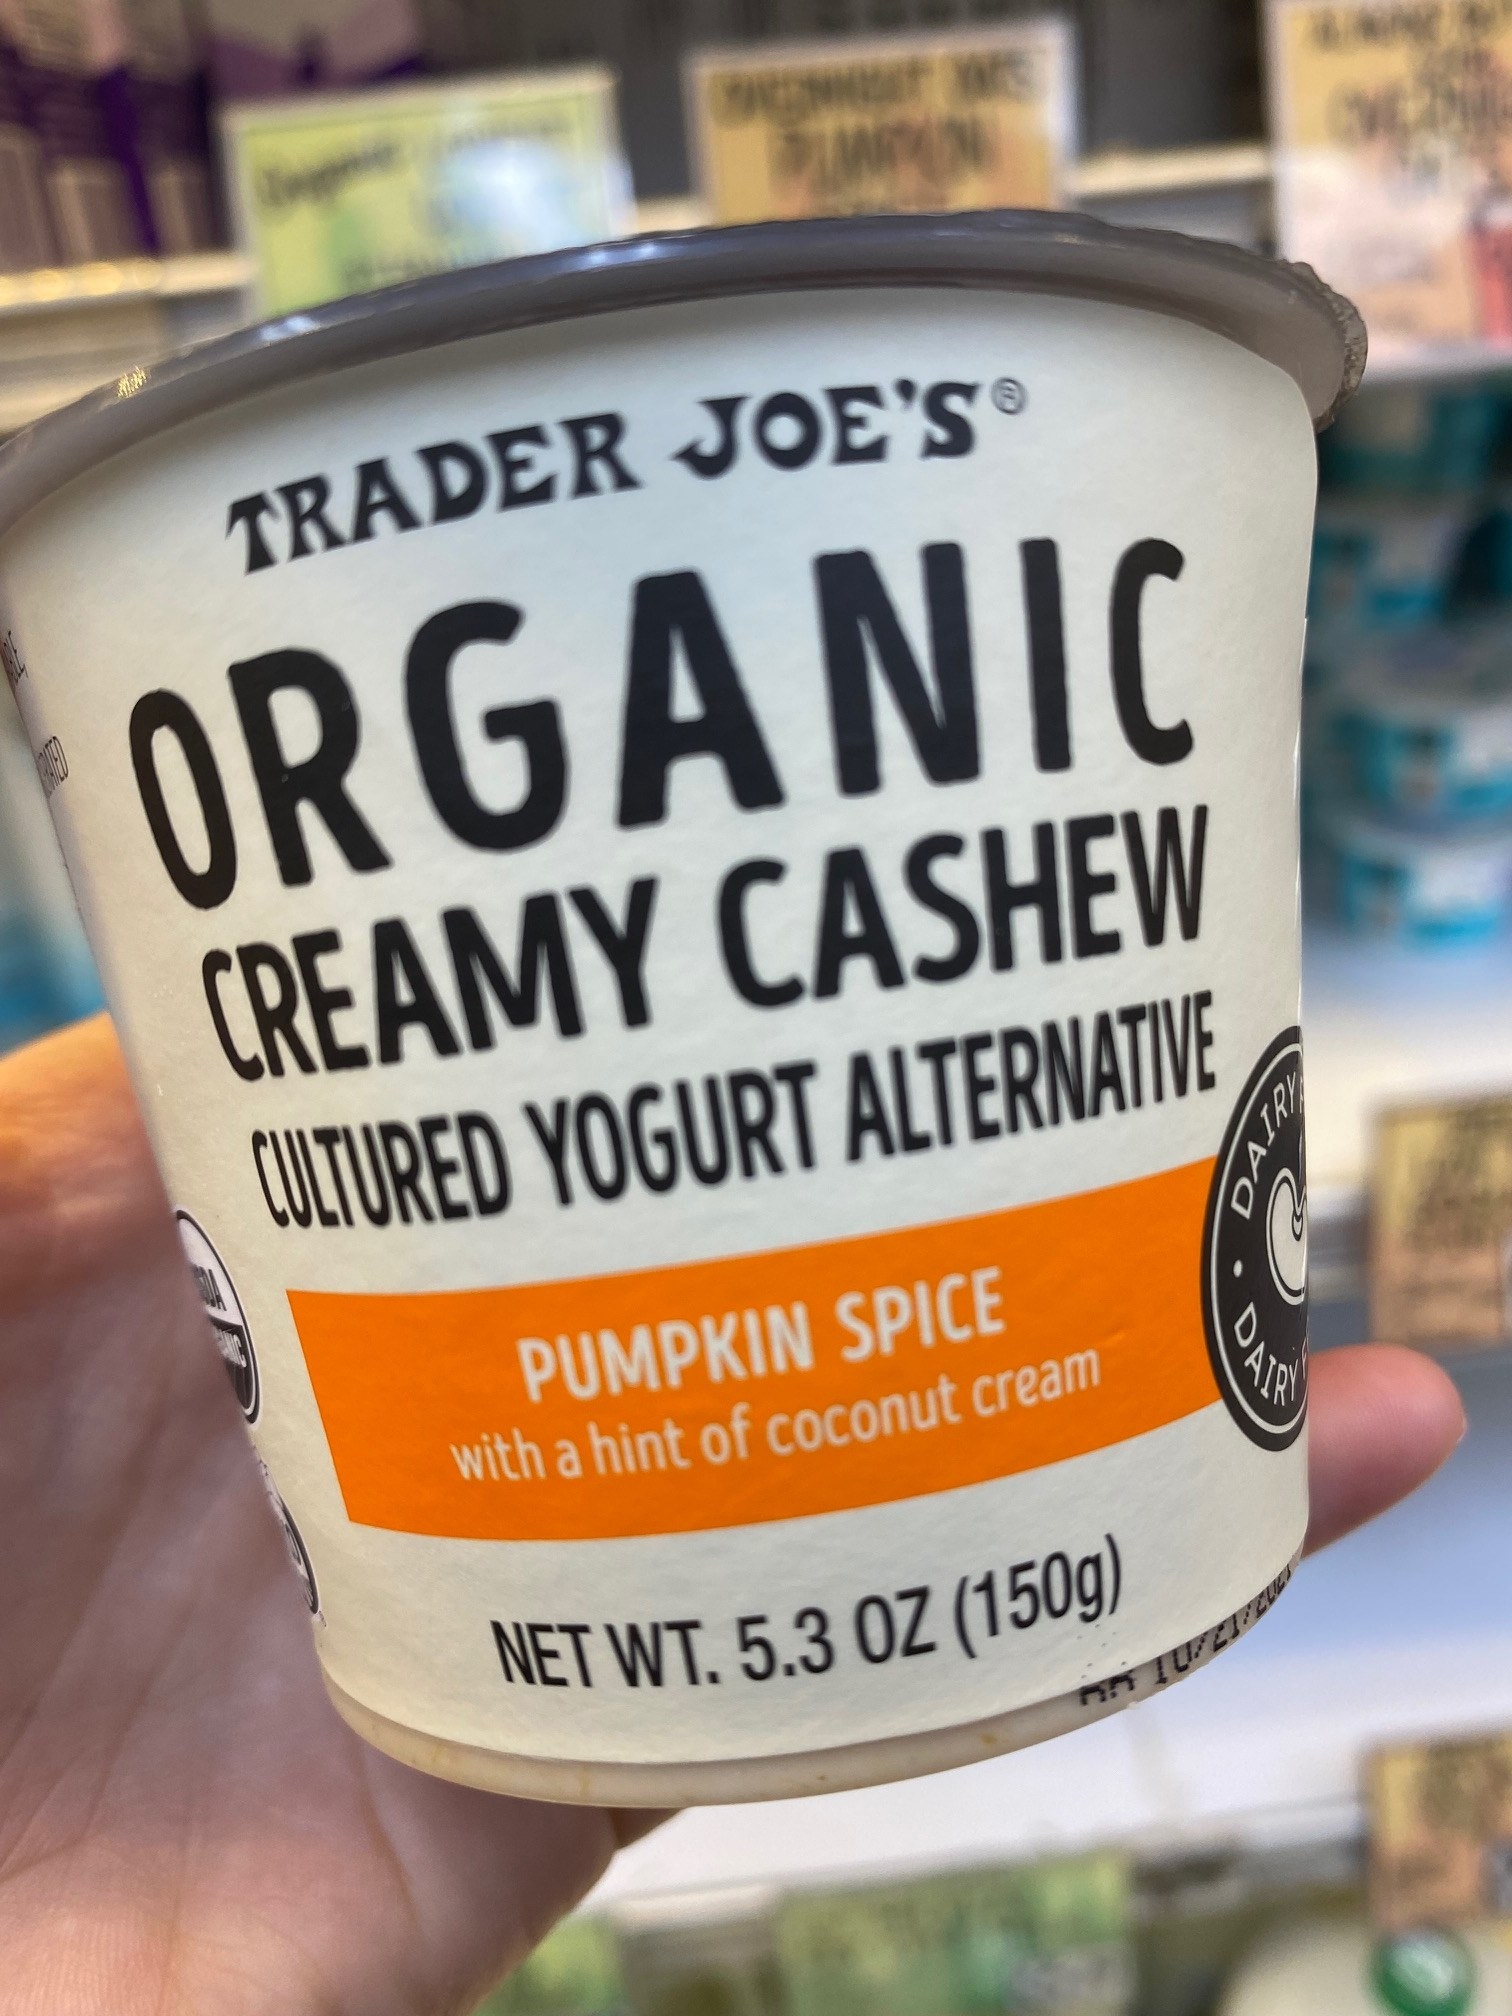 Organic Pumpkin Spice Creamy Cashew Yogurt Alternative